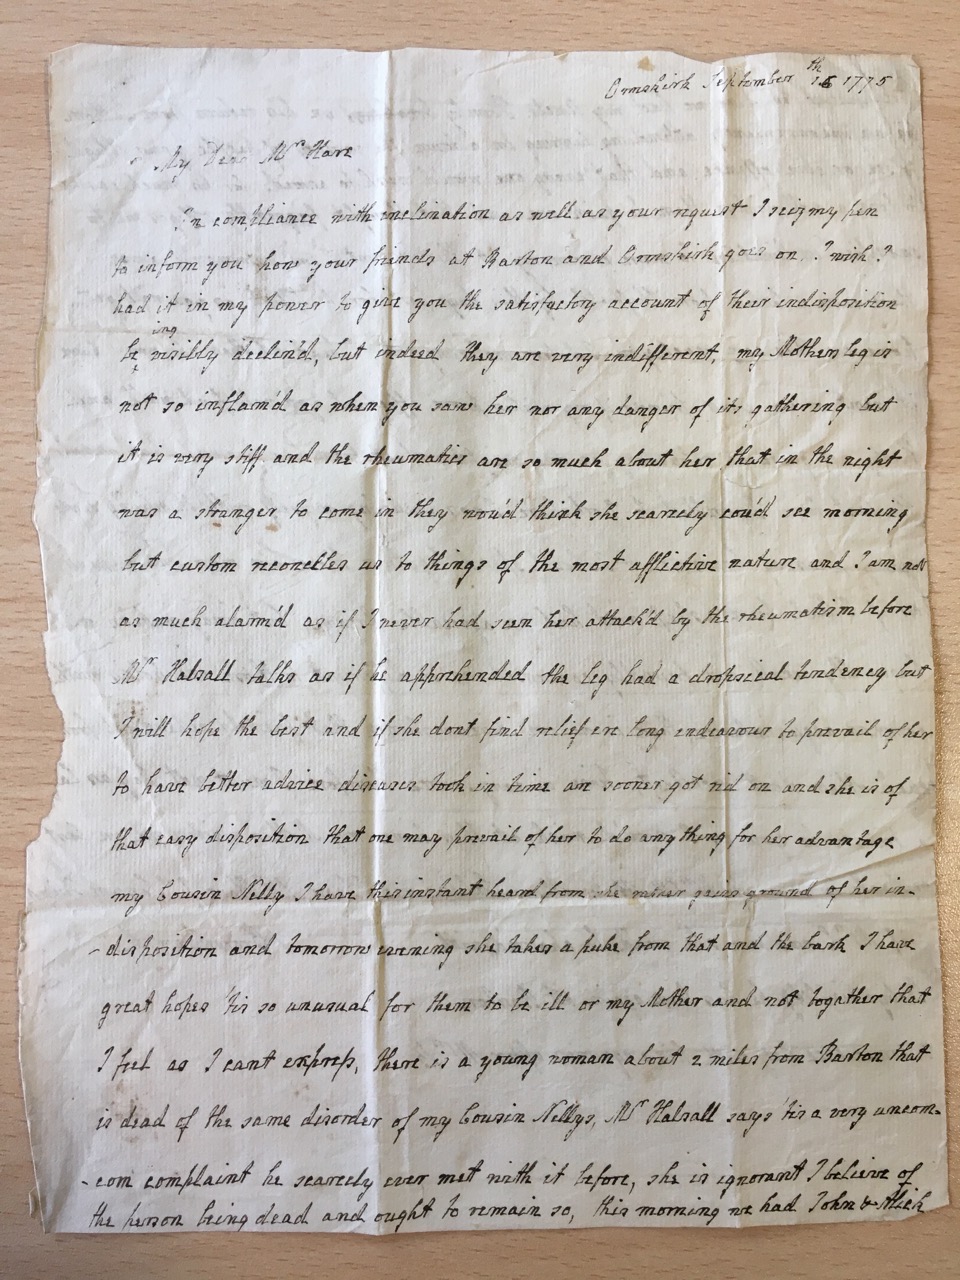 Image #1 of letter: J[enny] Brownsword to Anne Hare, 15 September 1775